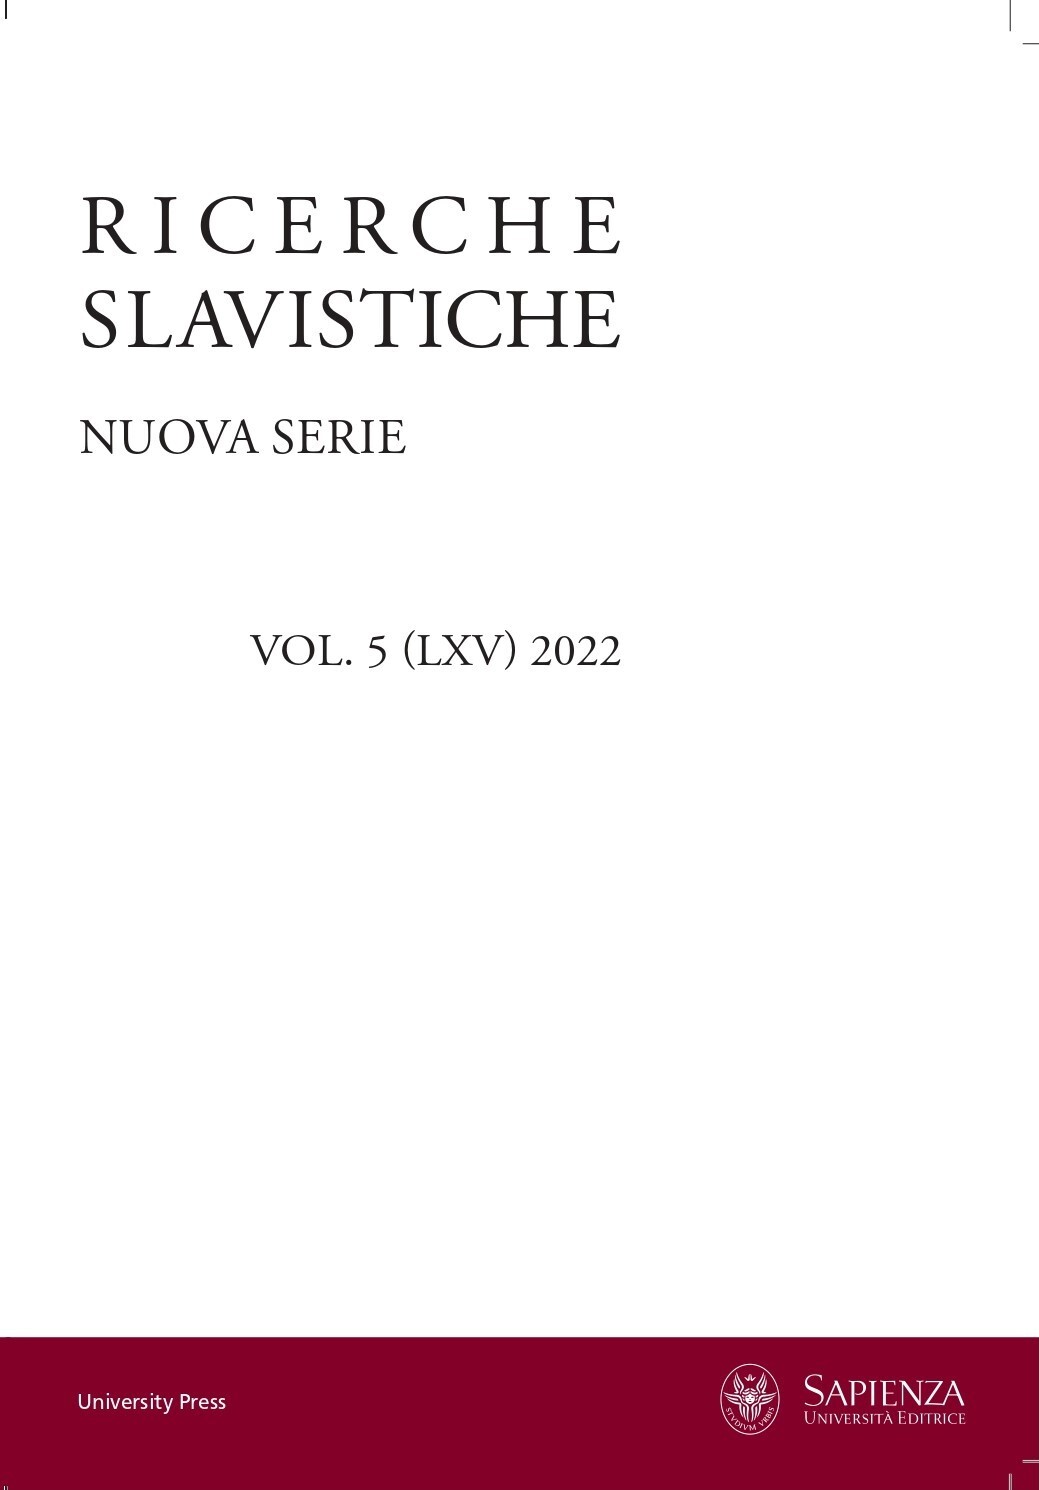 Serbocroatistics in the First Seventy Years of “Ricerche slavistiche” Cover Image